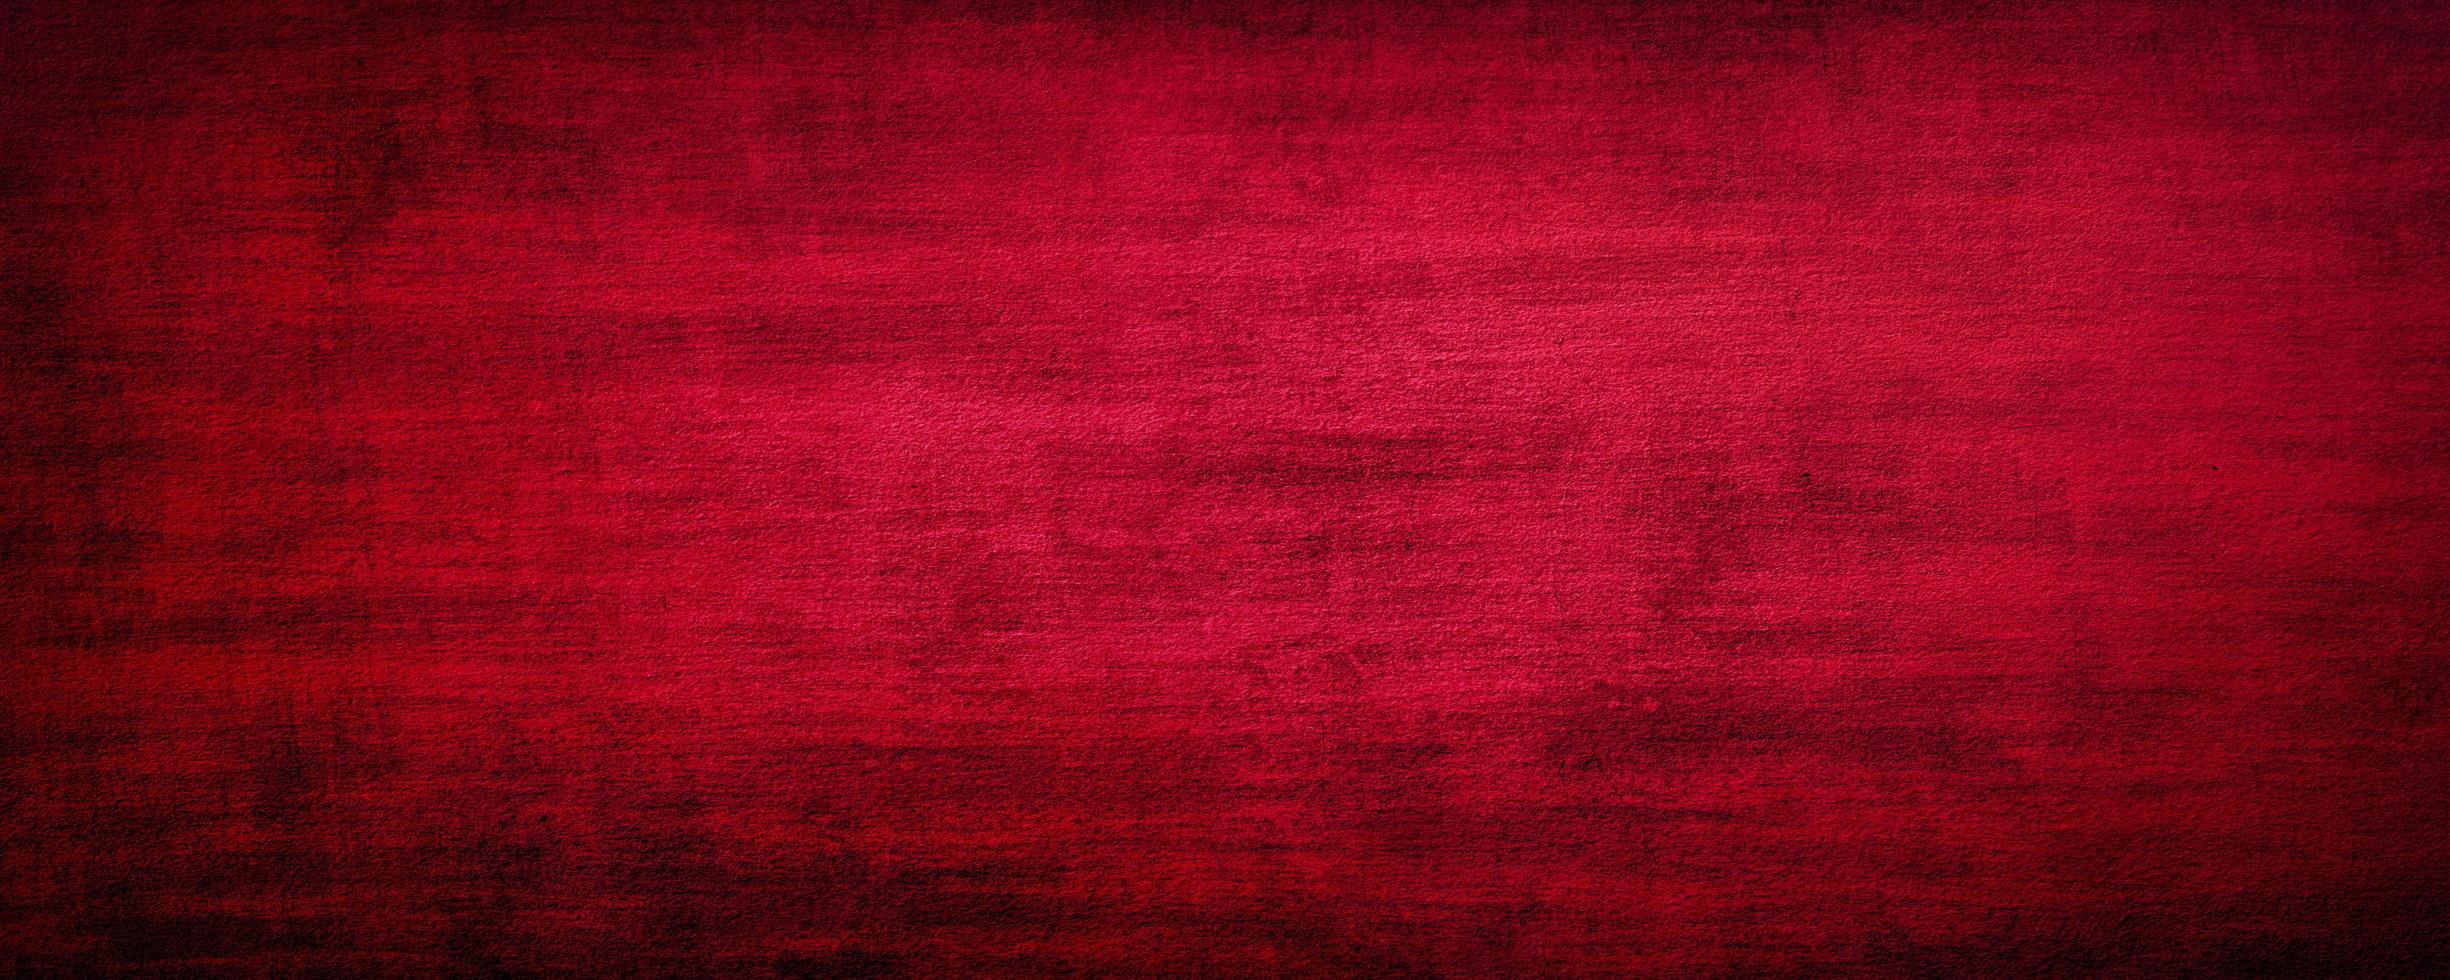 abstracte rode bloed cement muur achtergrond met gekrast, moderne achtergrond beton met ruwe textuur, schoolbord. concrete kunst ruwe gestileerde textuur foto